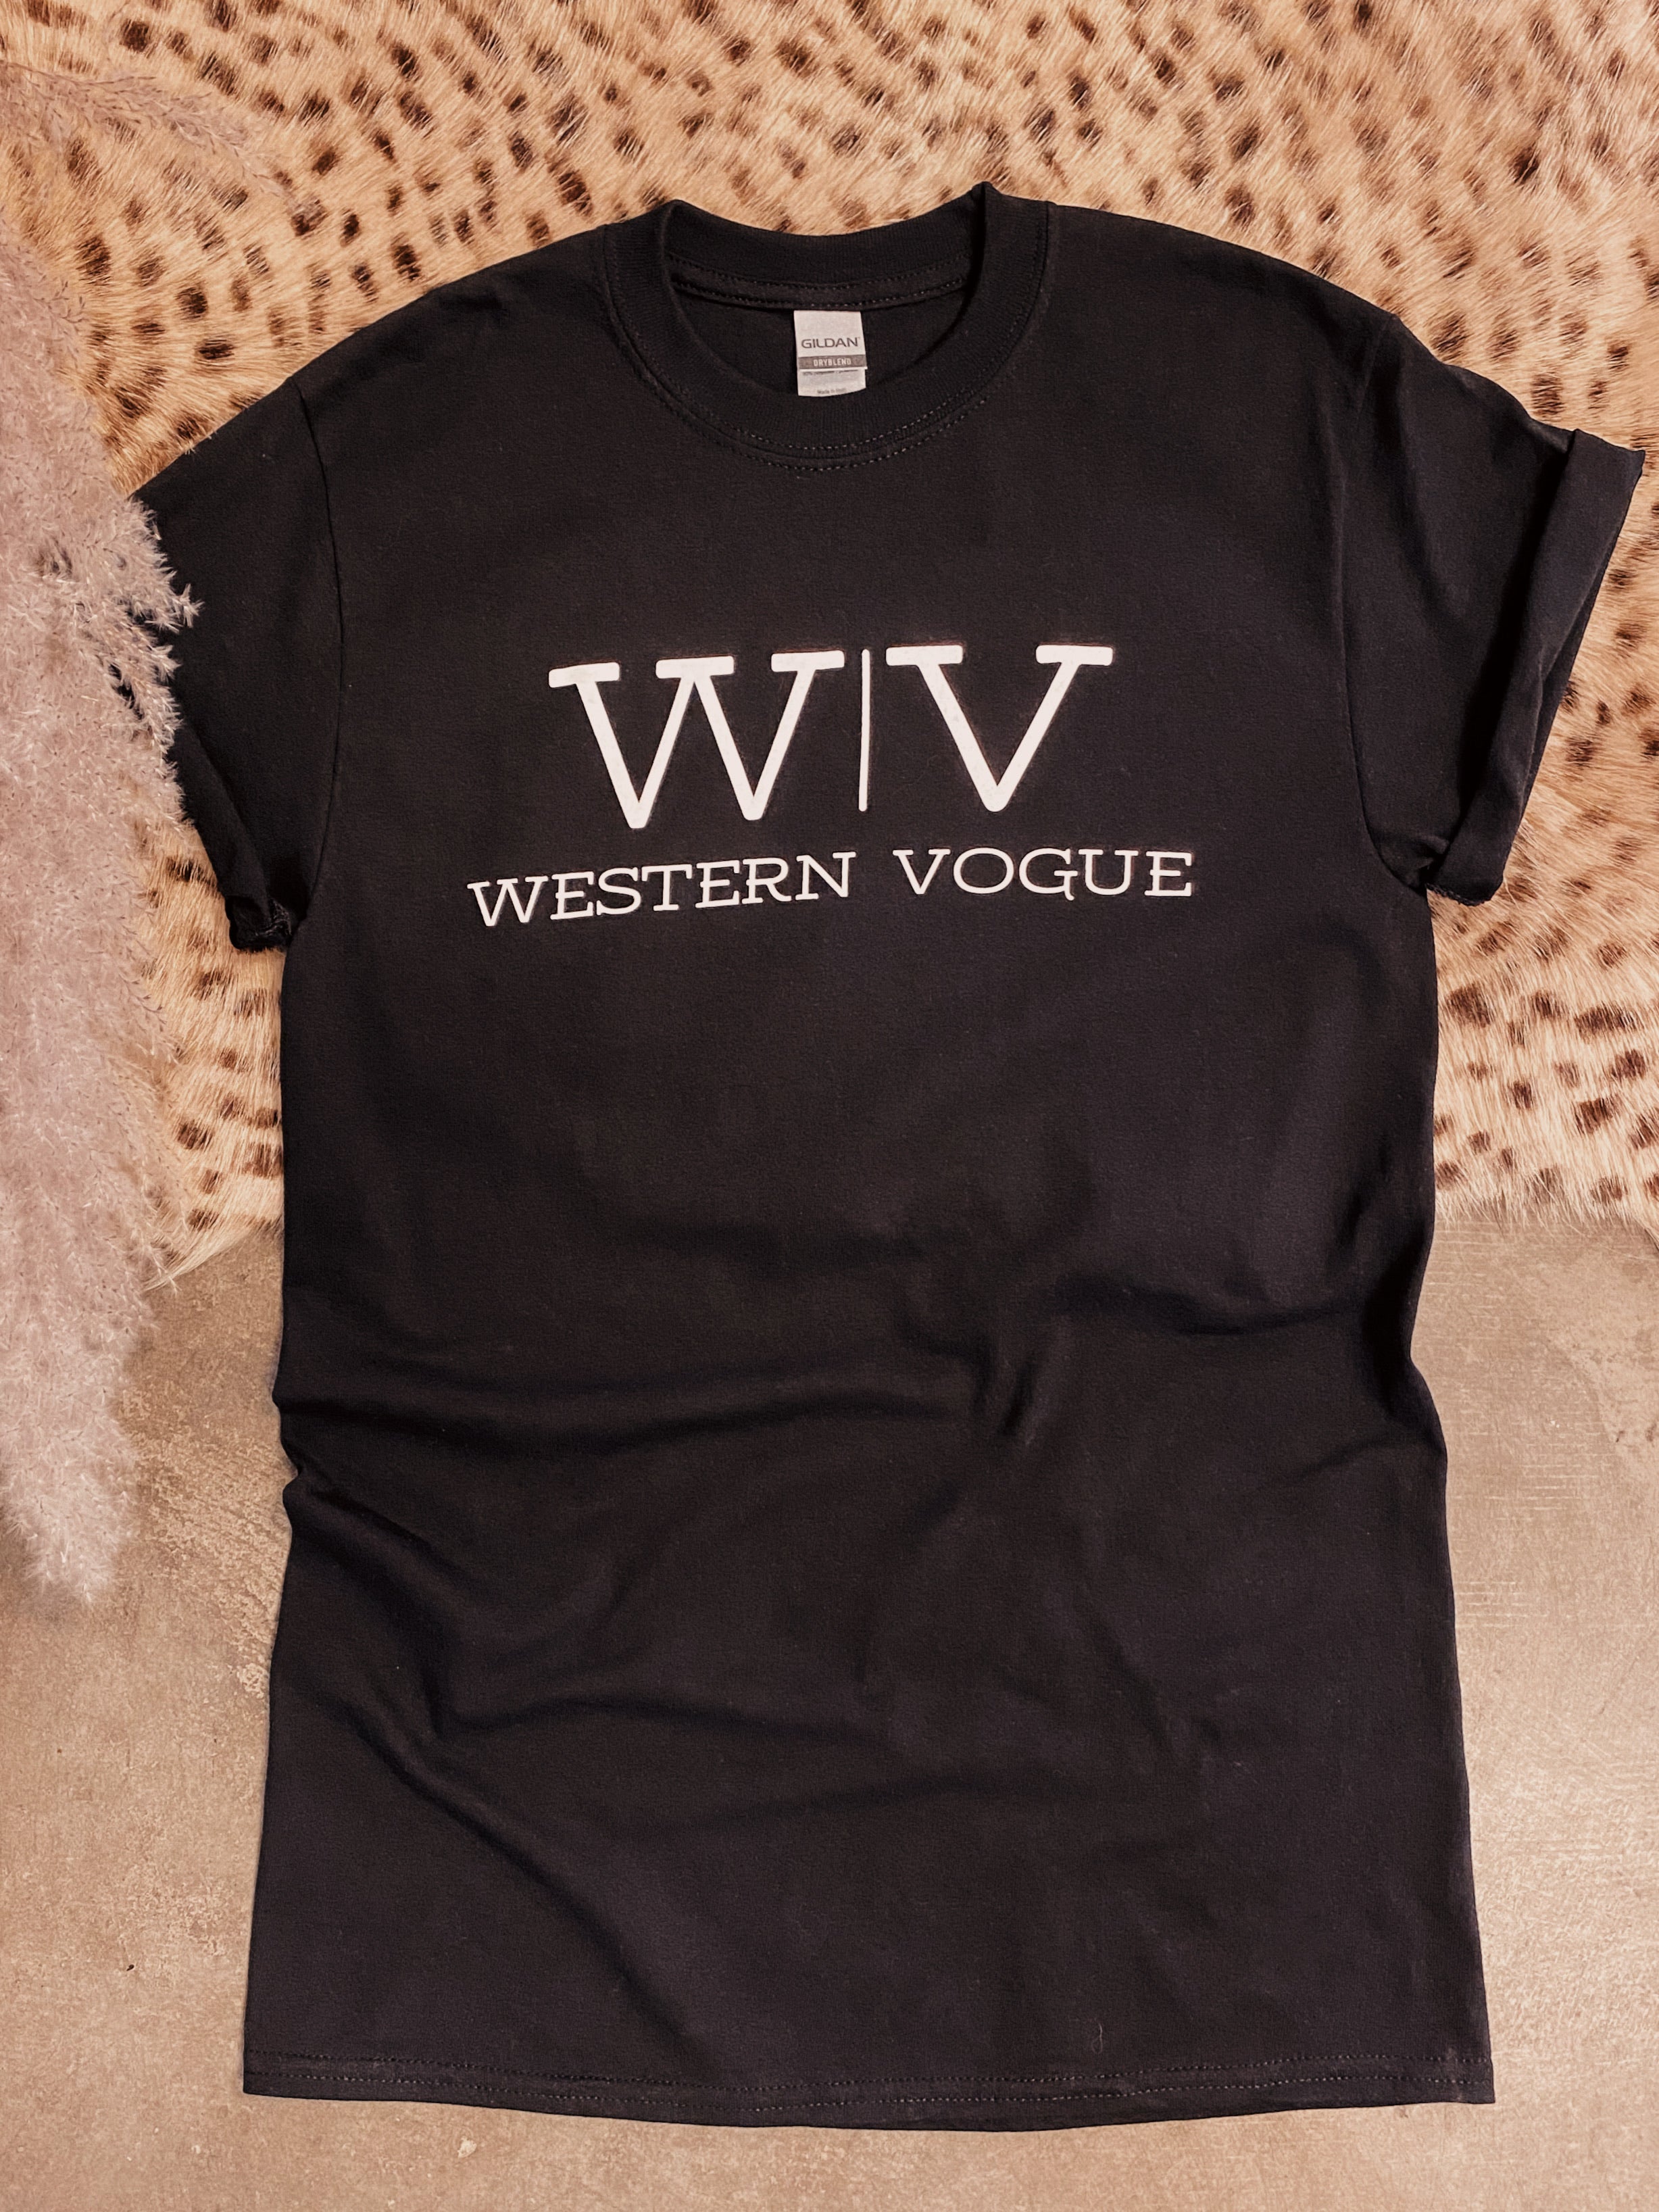 The Western Vogue T-Shirt